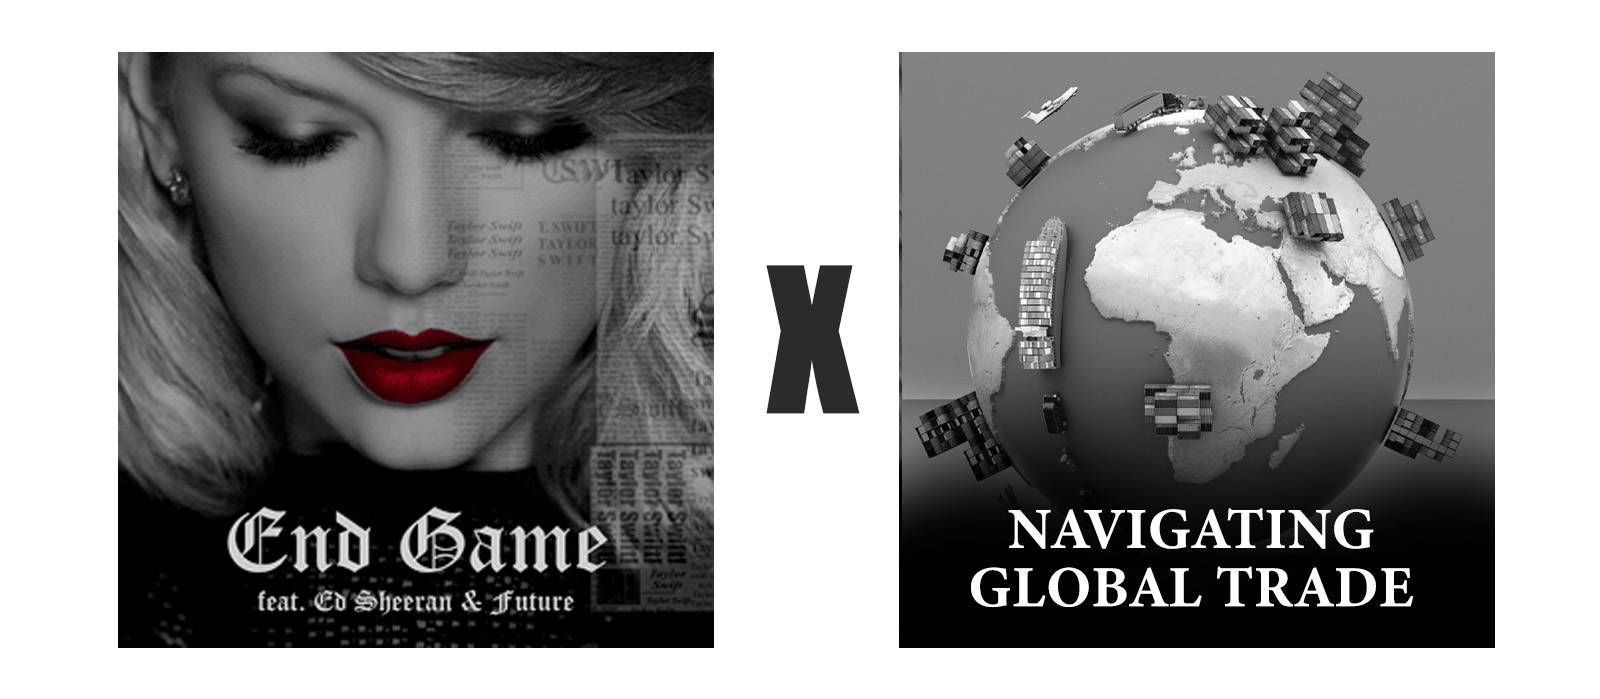 Taylor Swift End Game x Navigating Global Trade